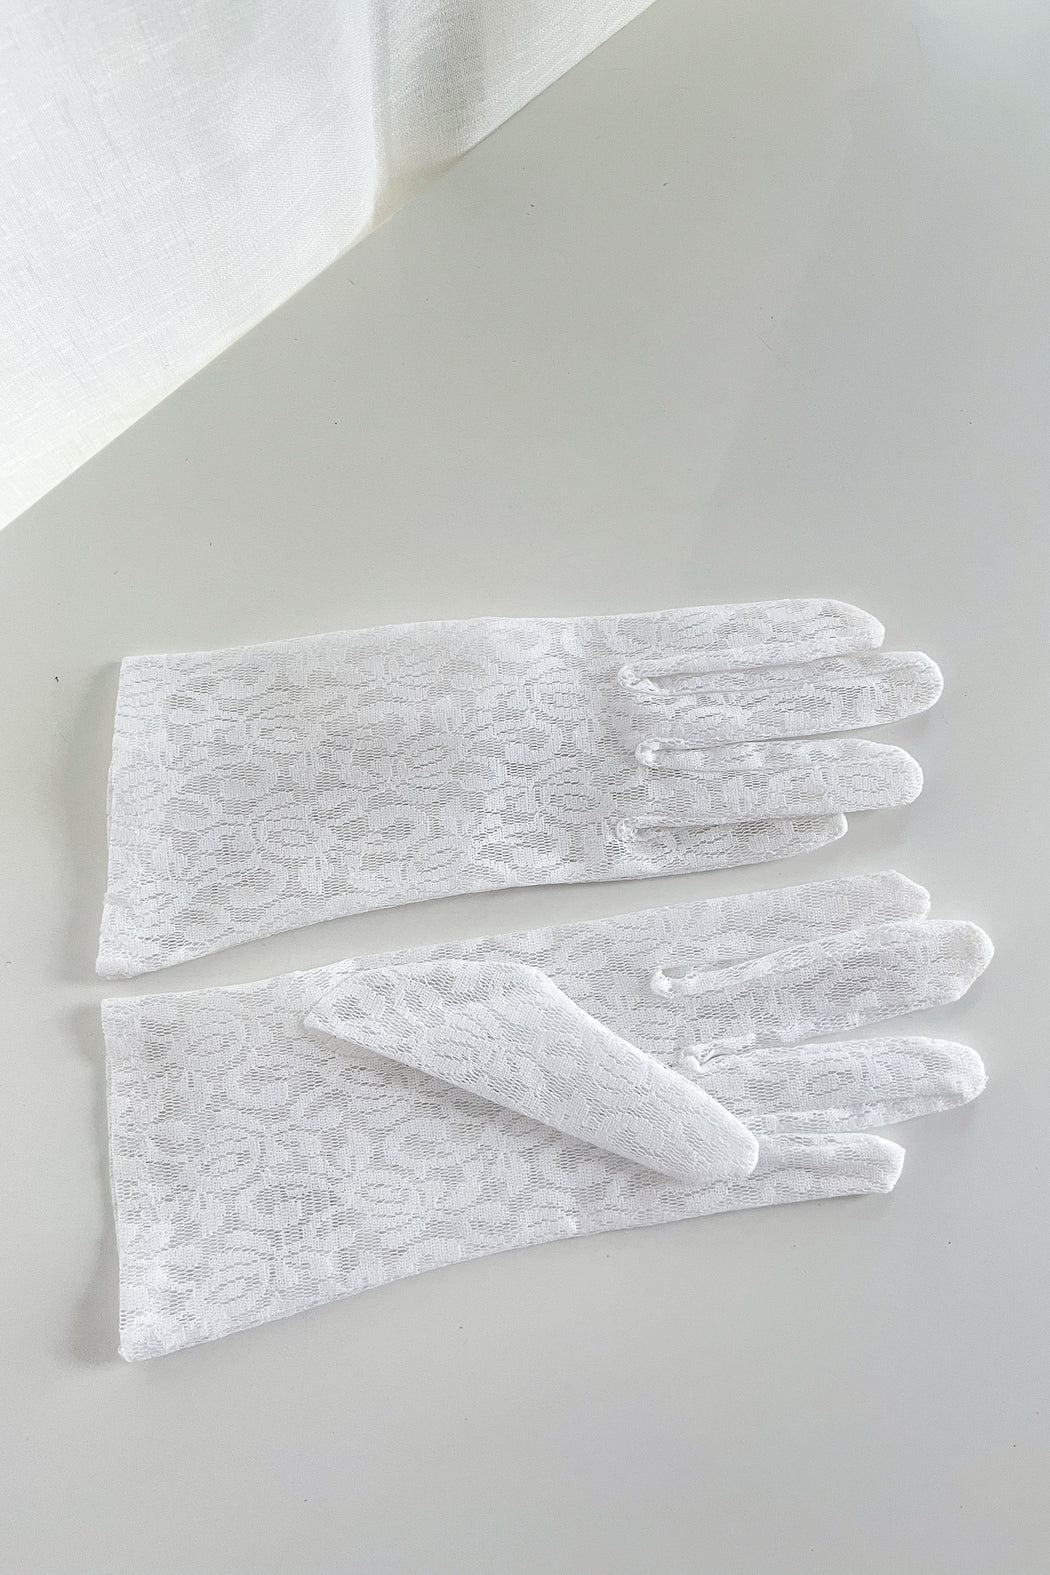 Vintage White Sheer Lace Gloves